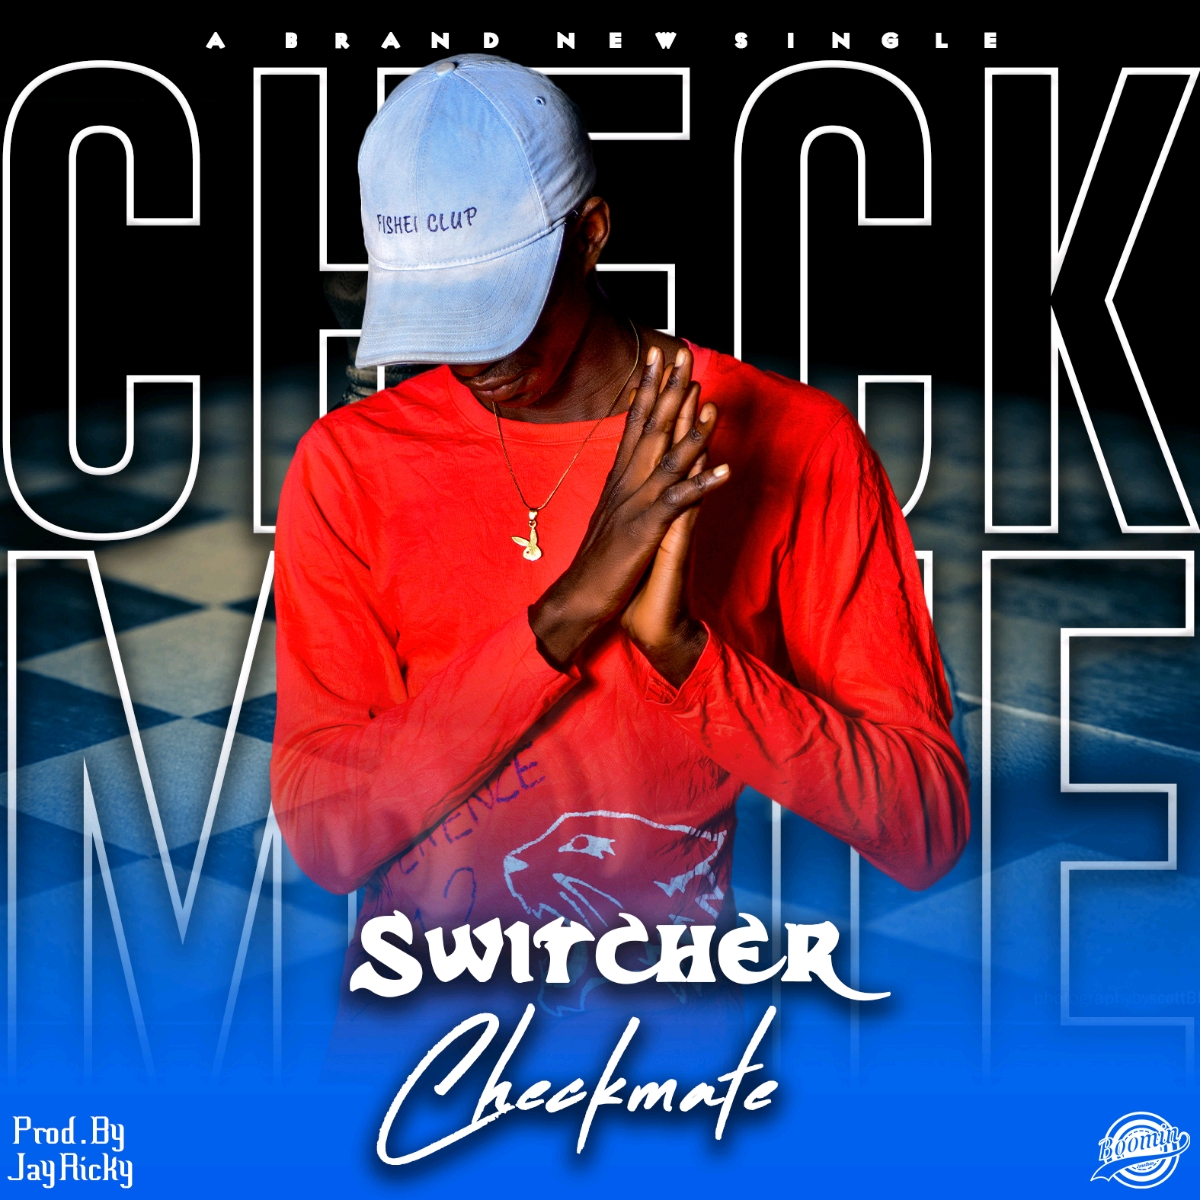 Switcher Zm - Checkmate, Pt. 1 MP3 Download & Lyrics